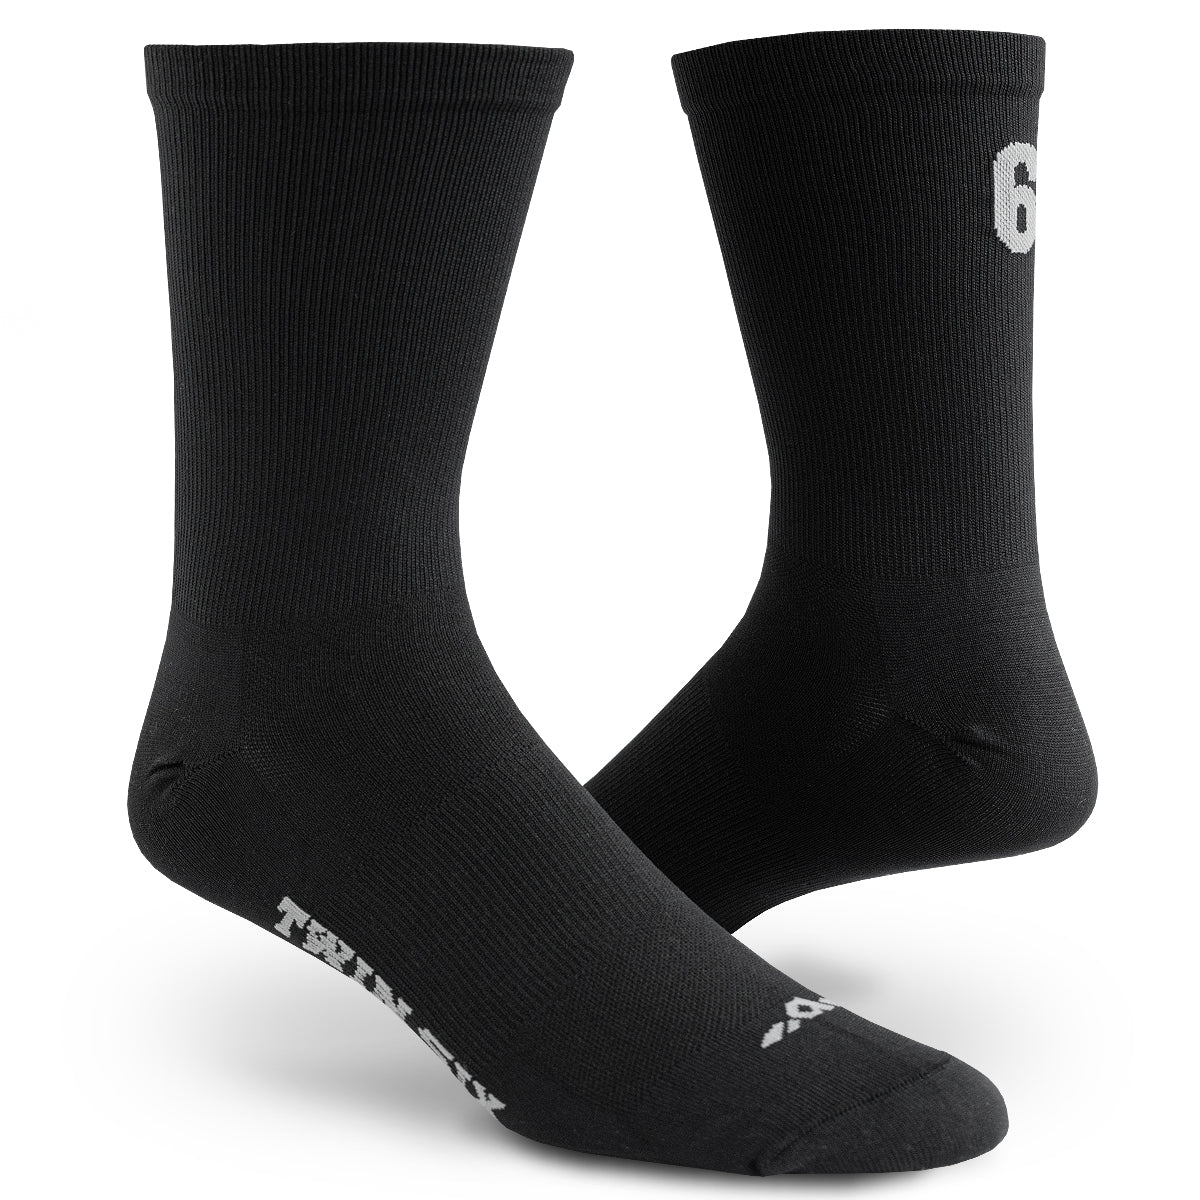 Standard Socks (Black)